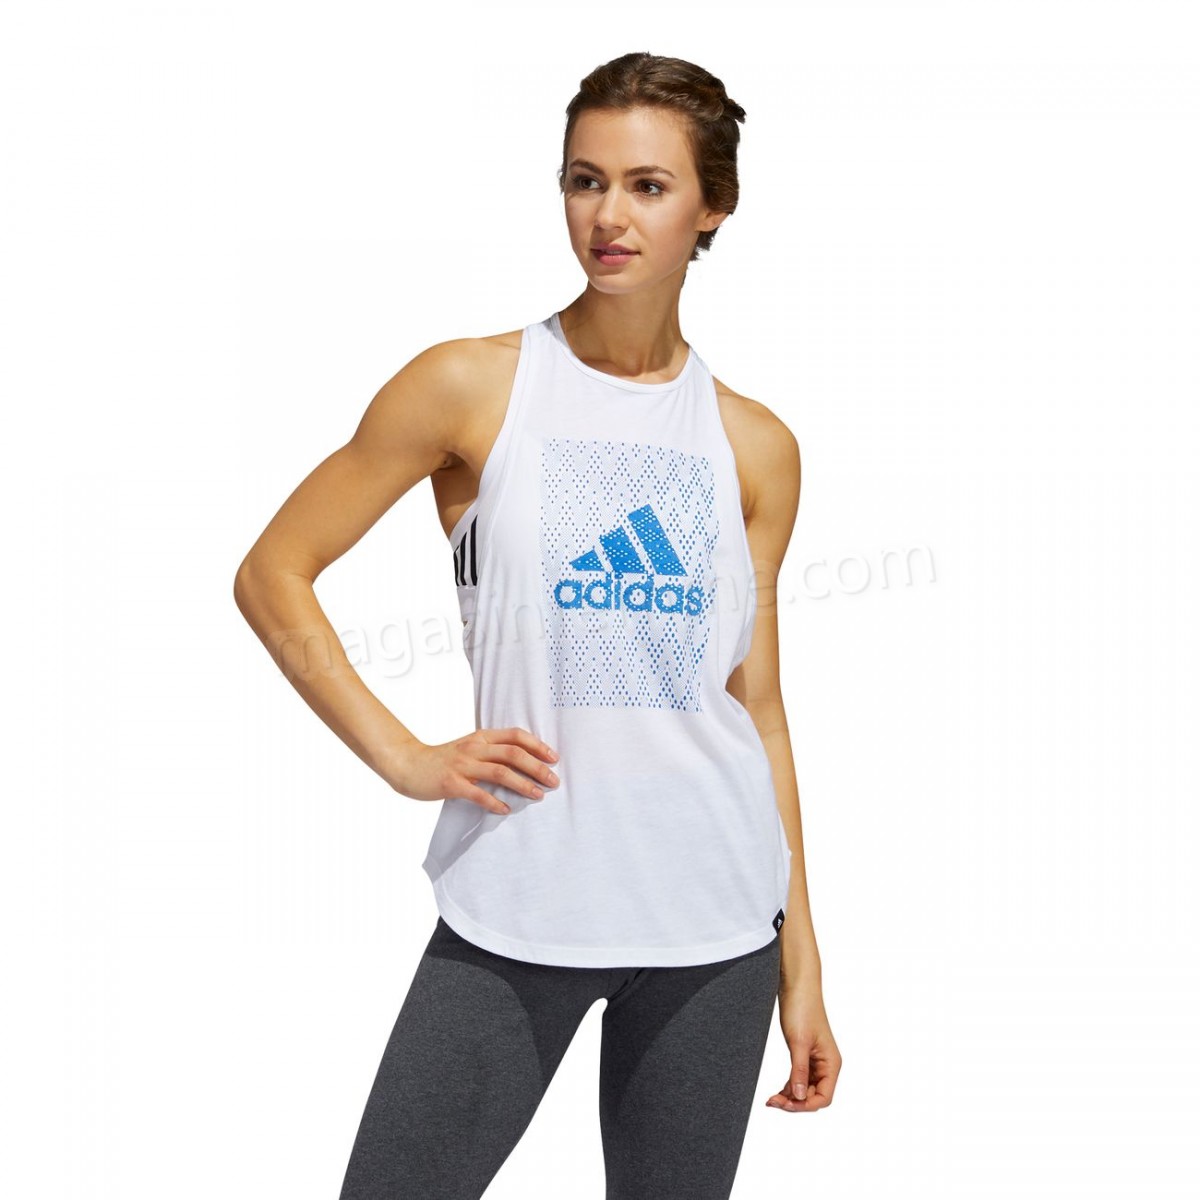 Adidas-Fitness femme ADIDAS Débardeur femme adidas Badge of Sport Graphics en solde - -2